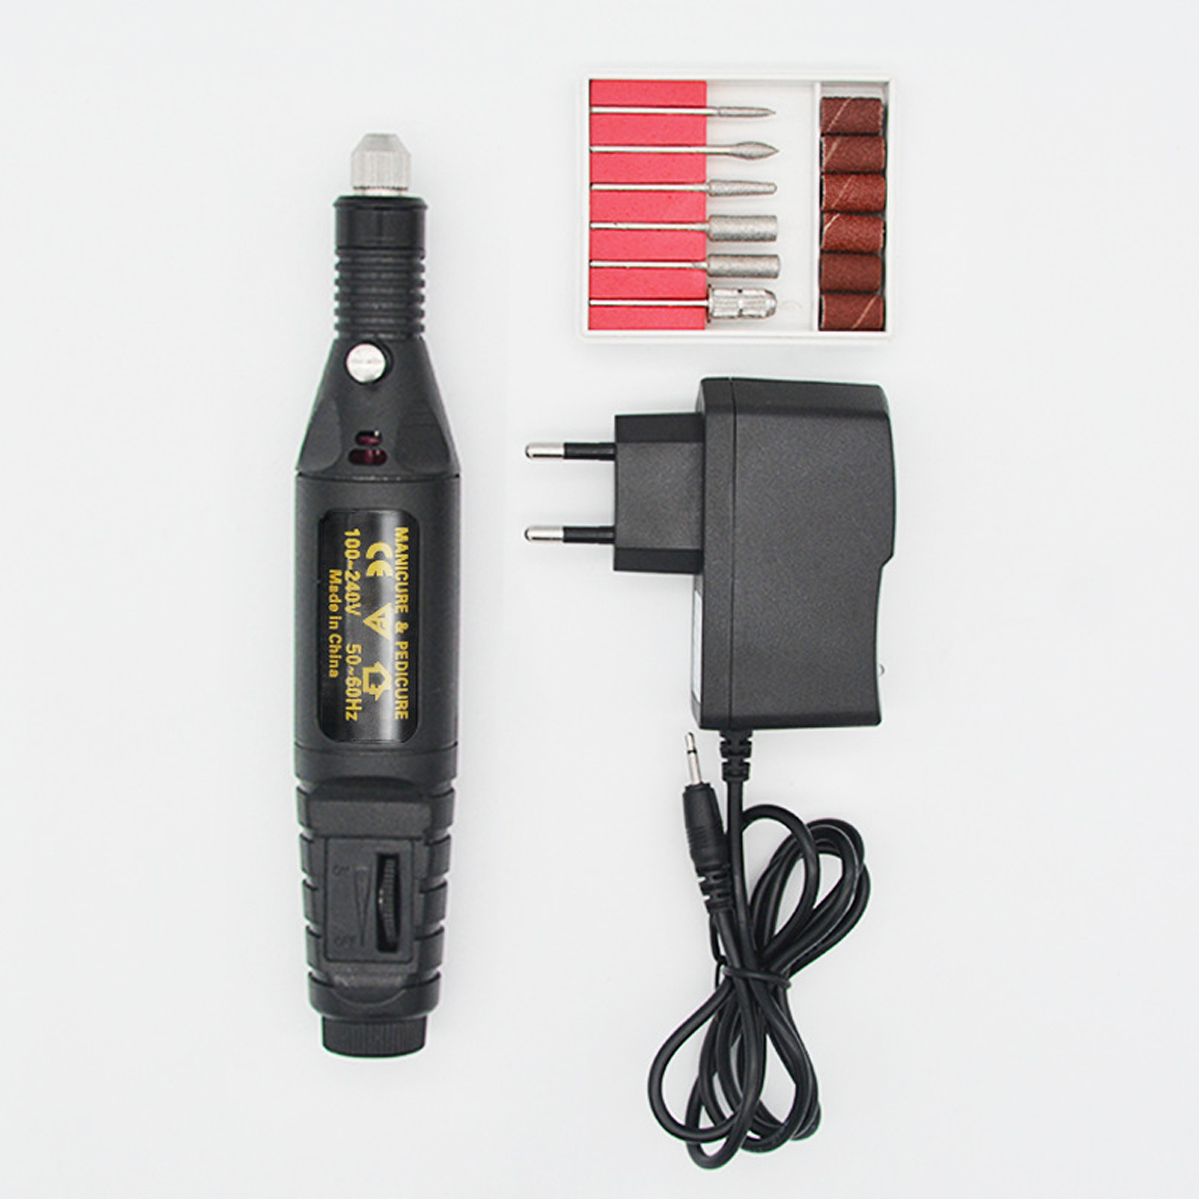 100-240V-Mini-Electric-Drill-Grinder-Set-Hand-Drill-Rotary-Tool-Polishing-Carving-Adjutable-Speed-El-1693497